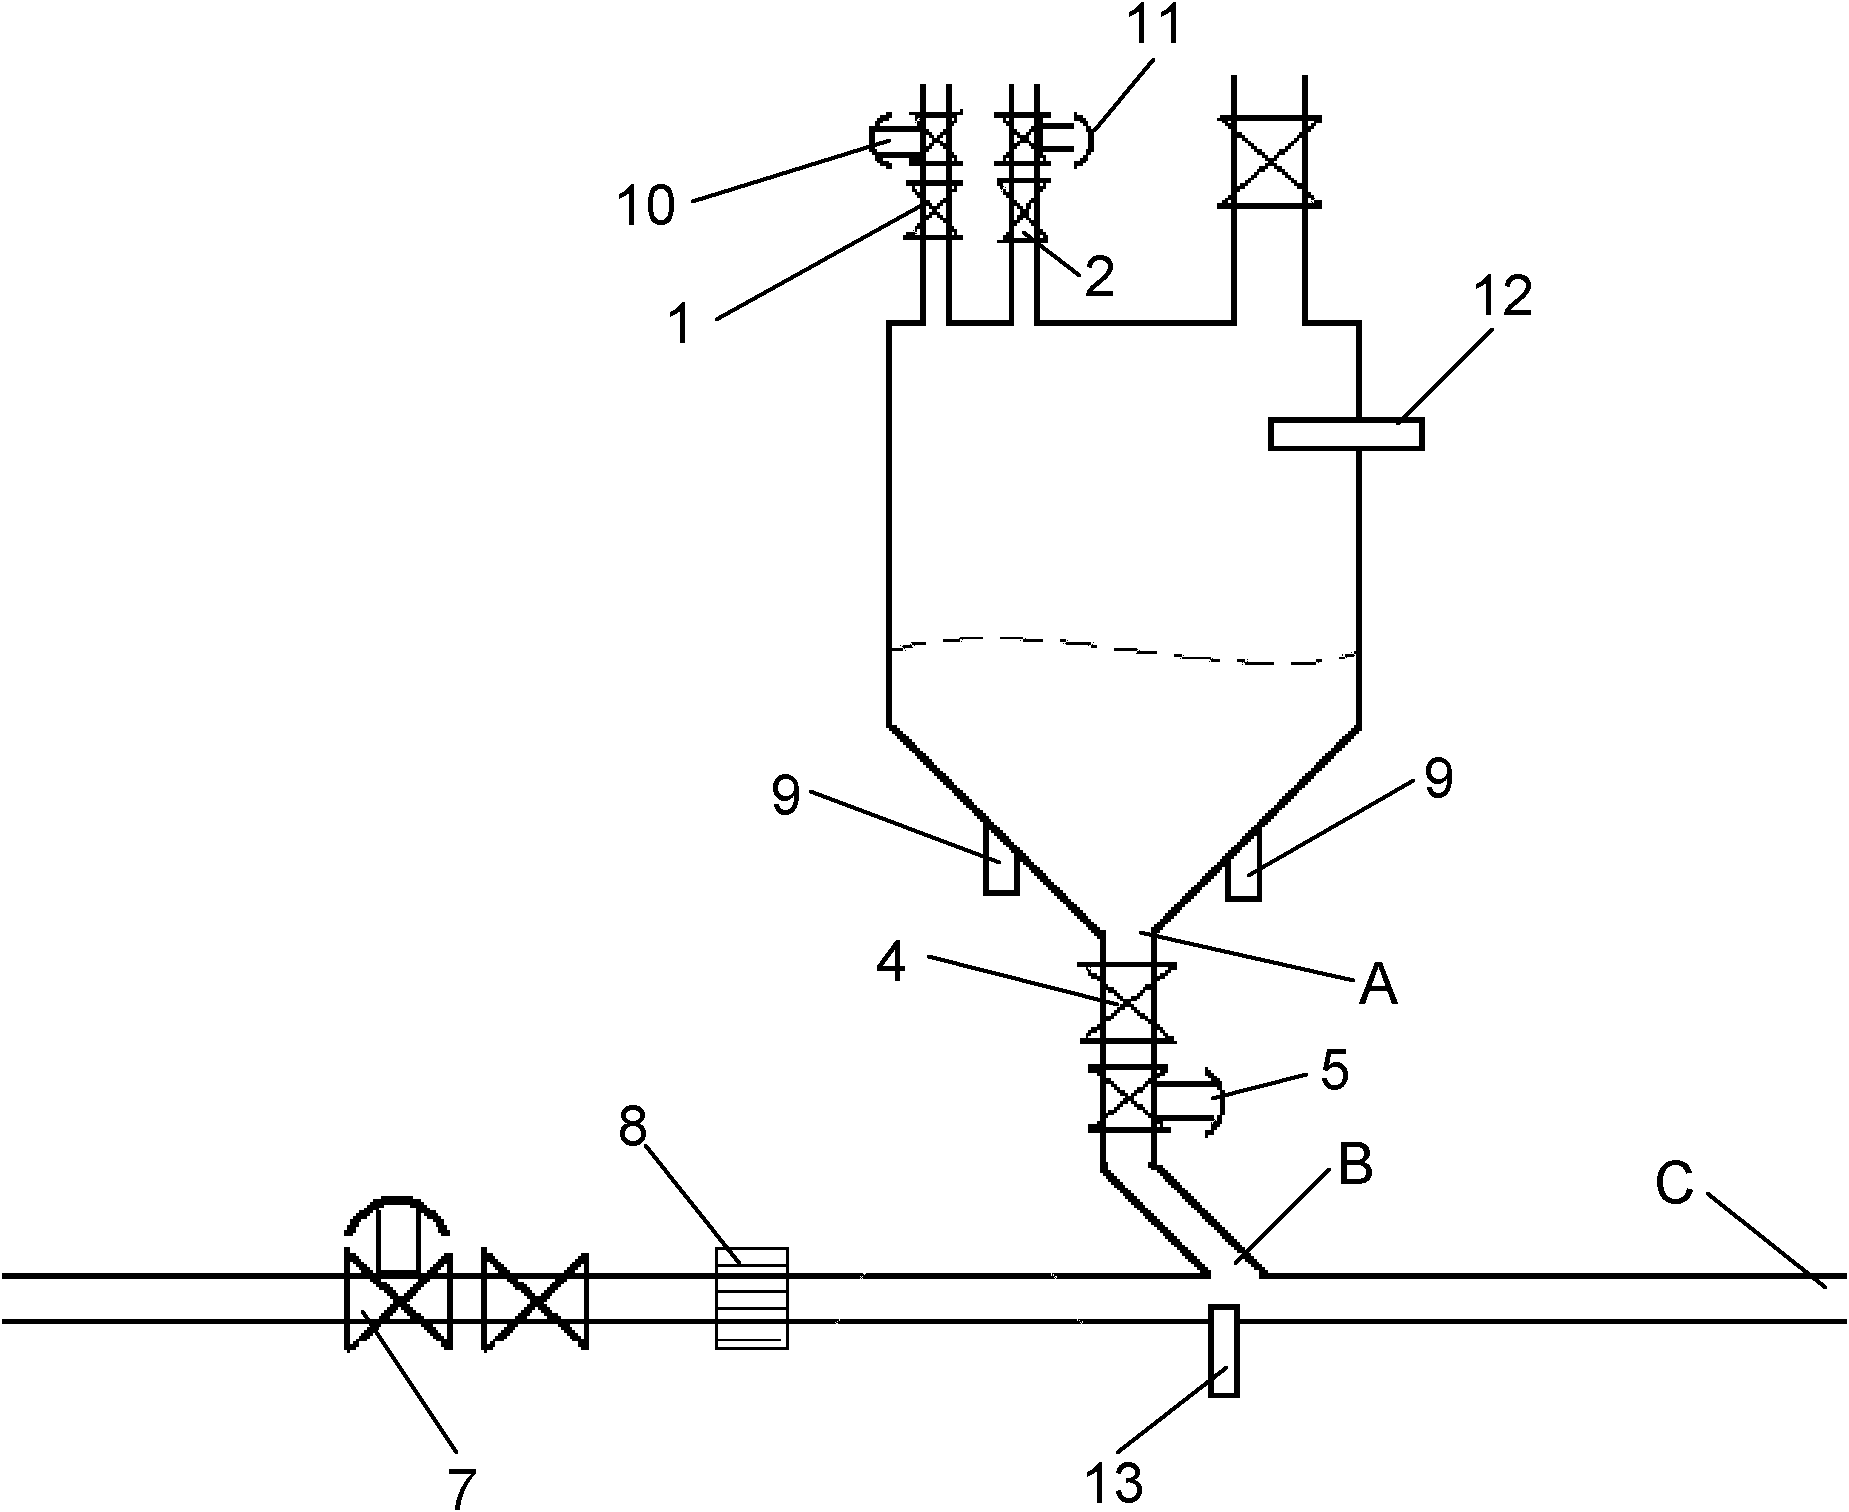 Flow control method for powder blowing in molten iron dephosphorization pretreatment process